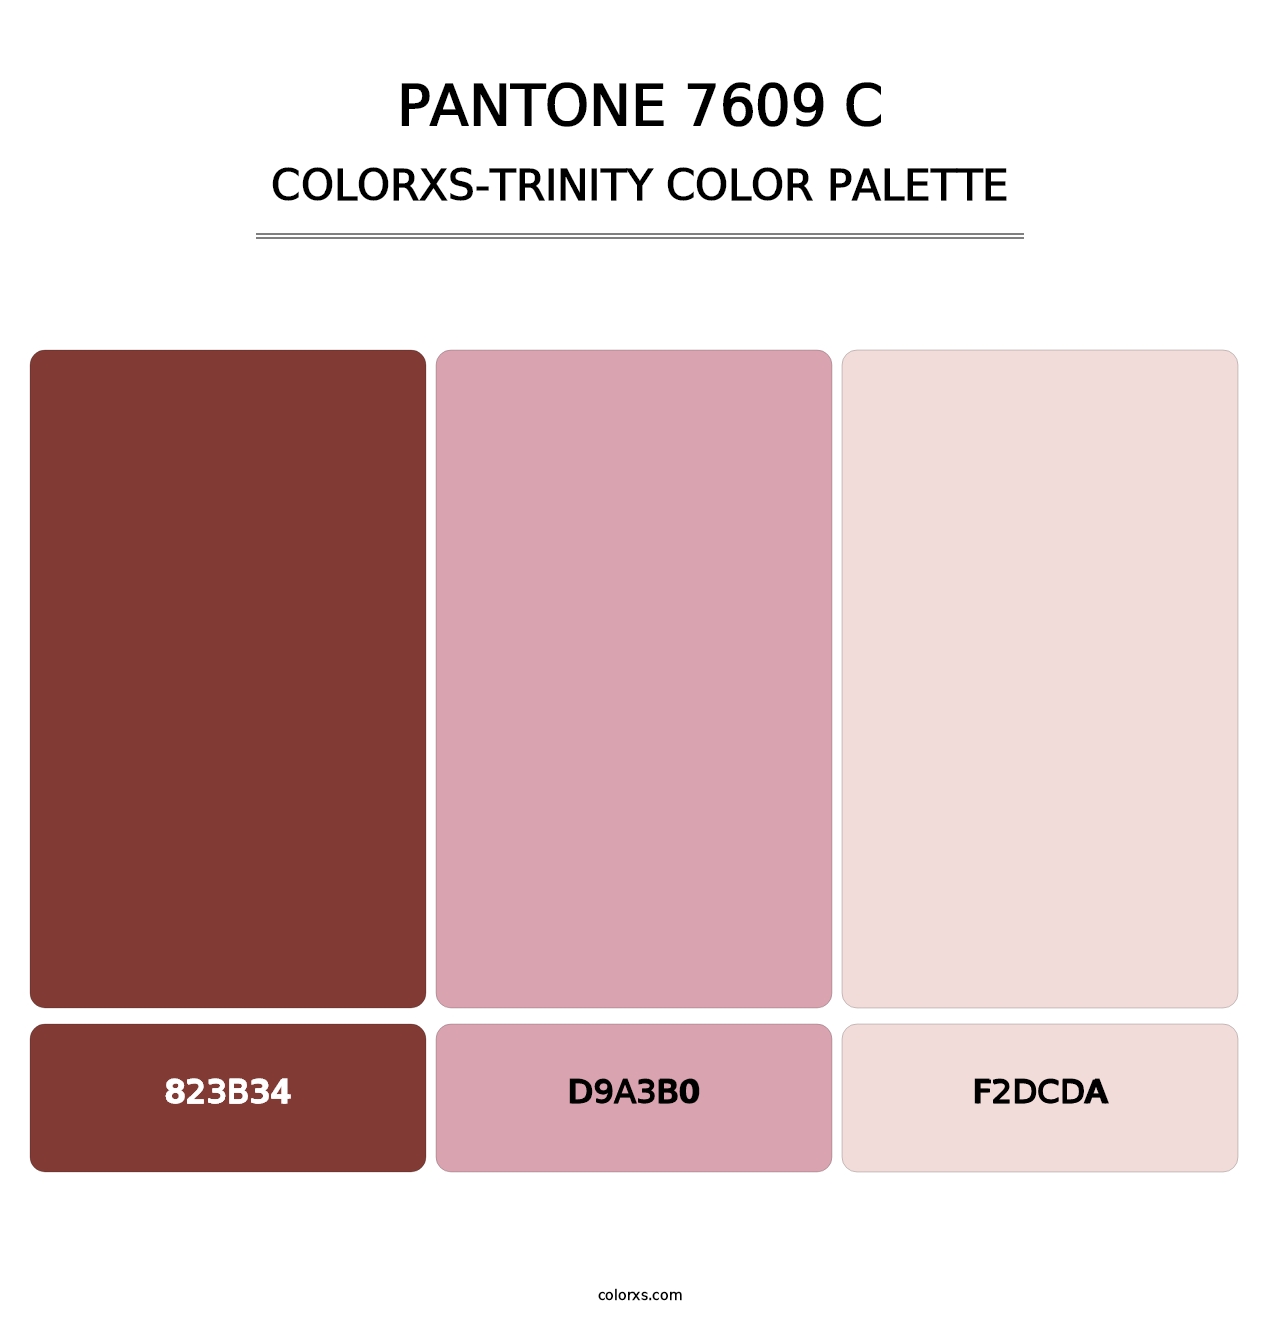 PANTONE 7609 C - Colorxs Trinity Palette